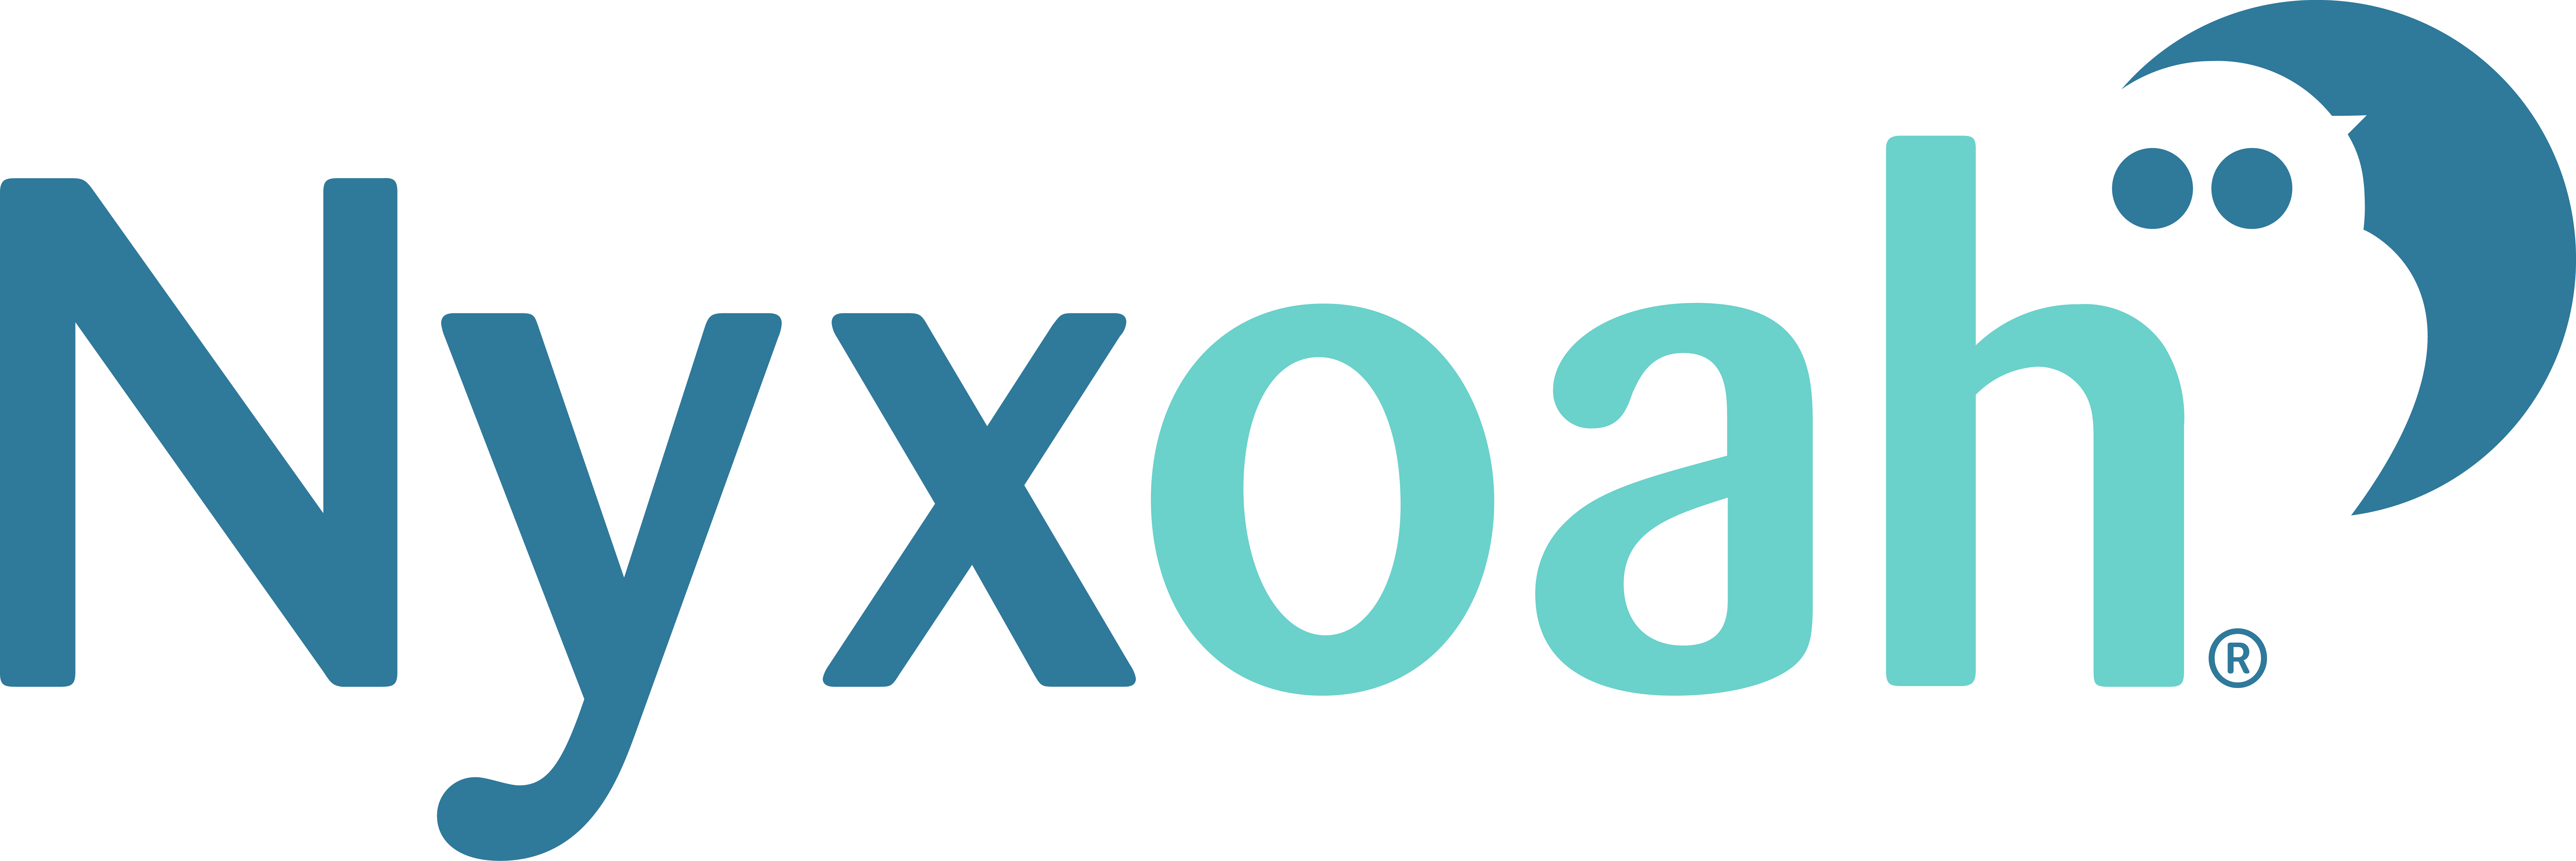 Correct Nyxoah logo.png